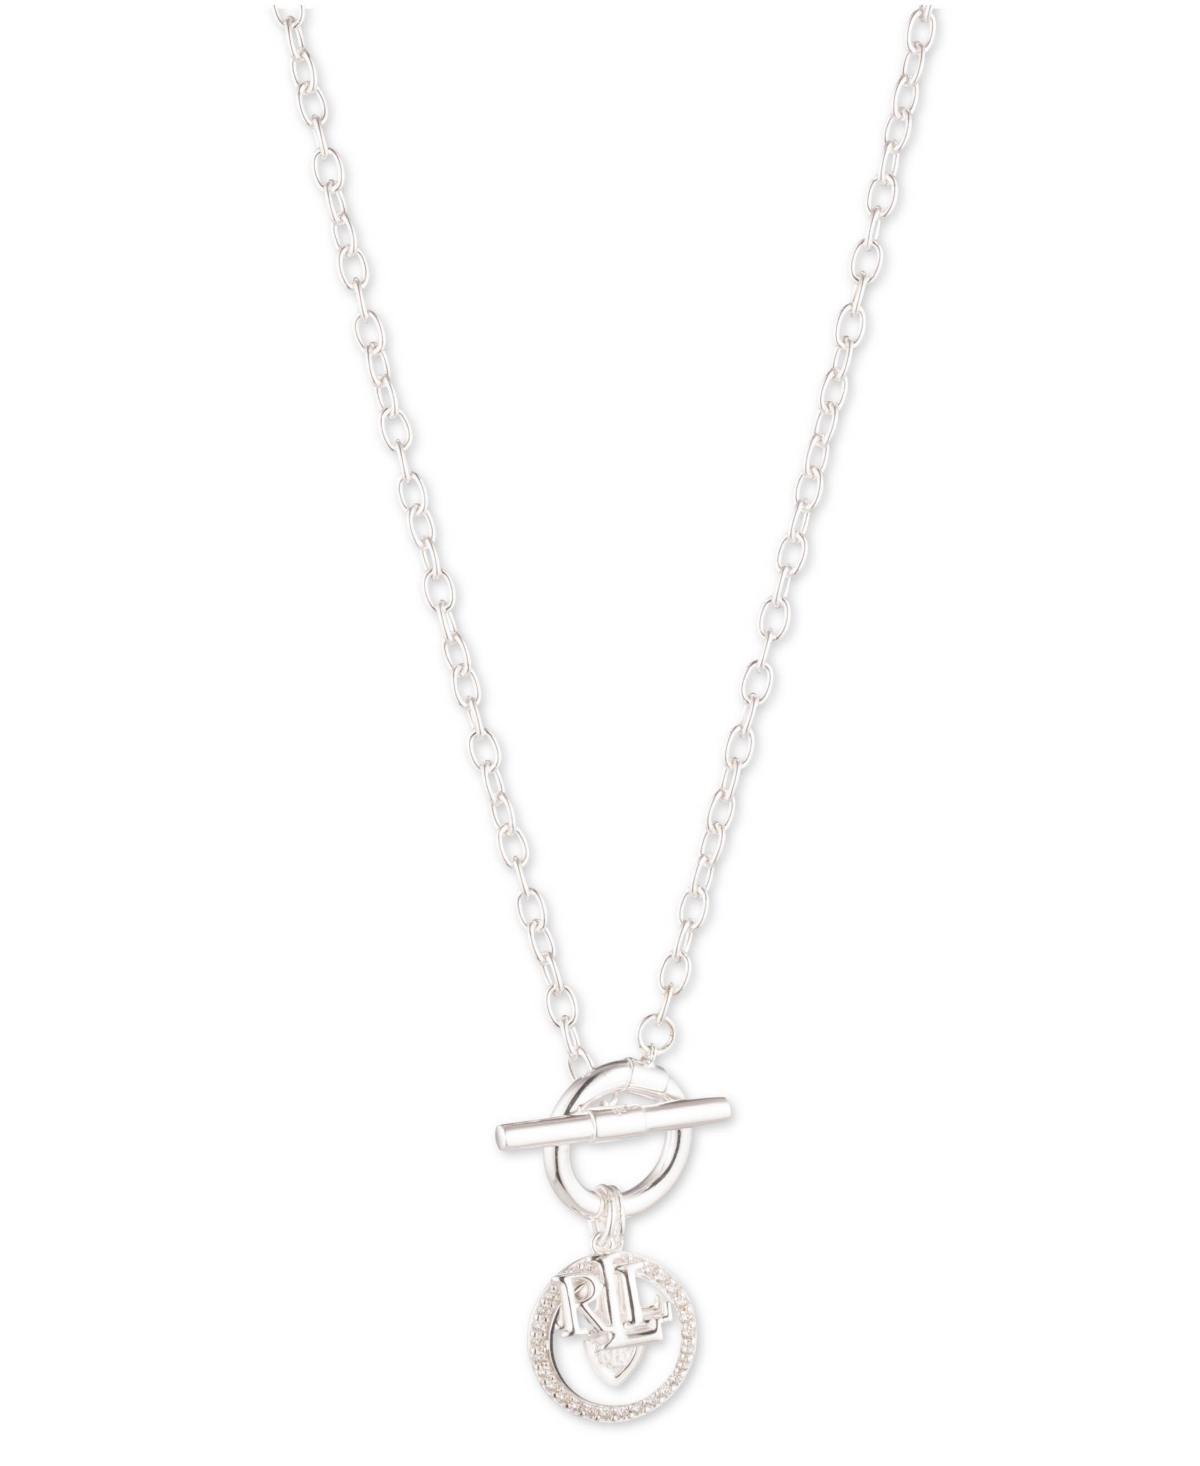 Lauren Ralph Lauren Cubic Zirconia Charm Collar Necklace in Sterling Silver - Sterling Silver